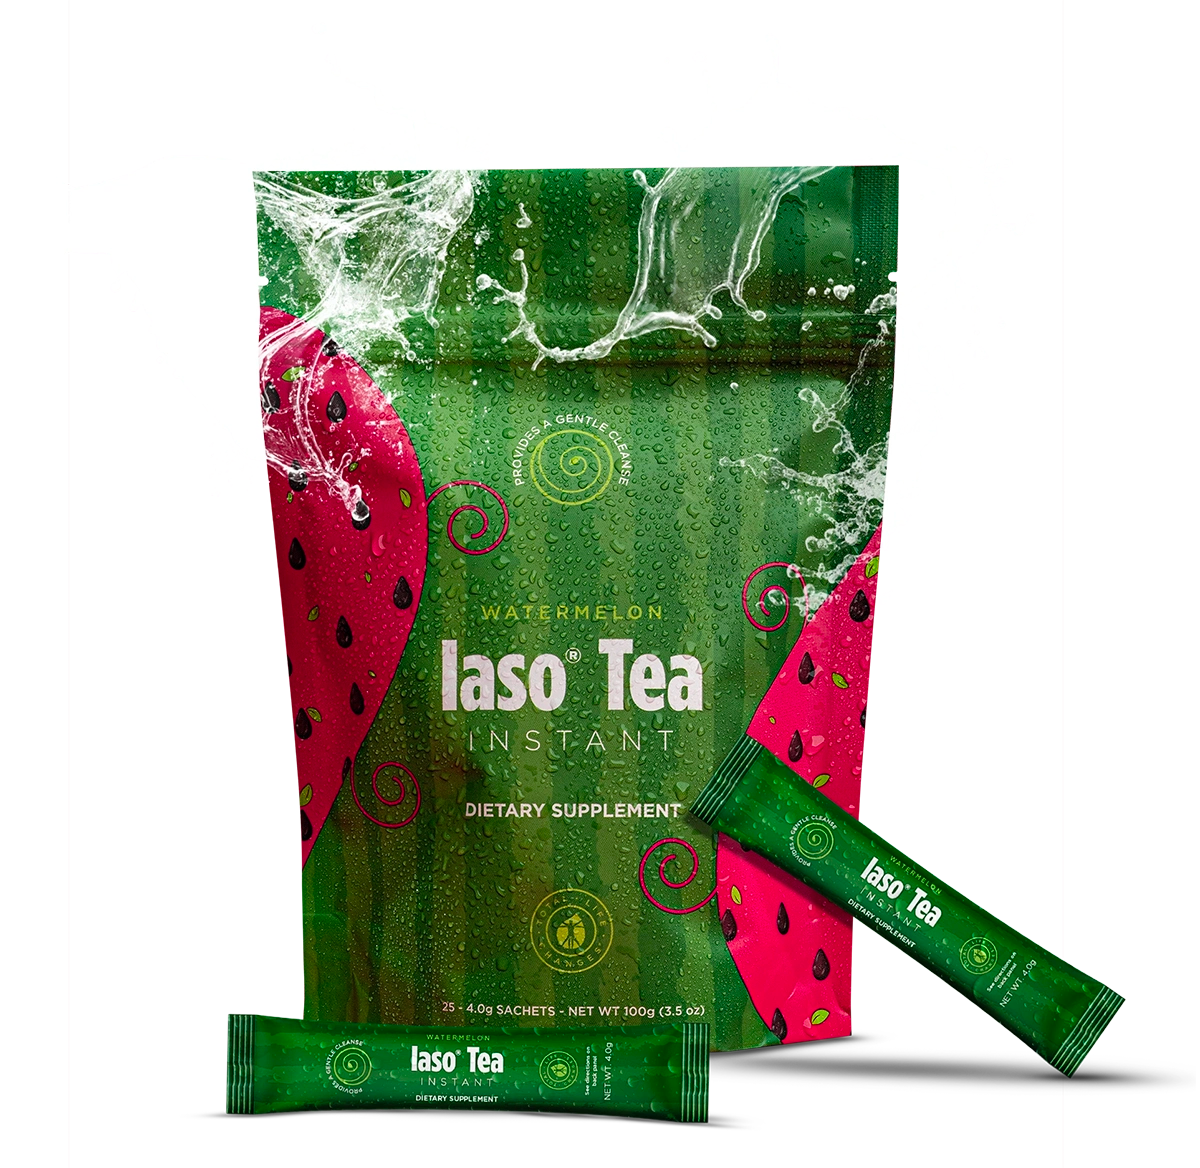 NEW Watermelon Iaso Instant Tea